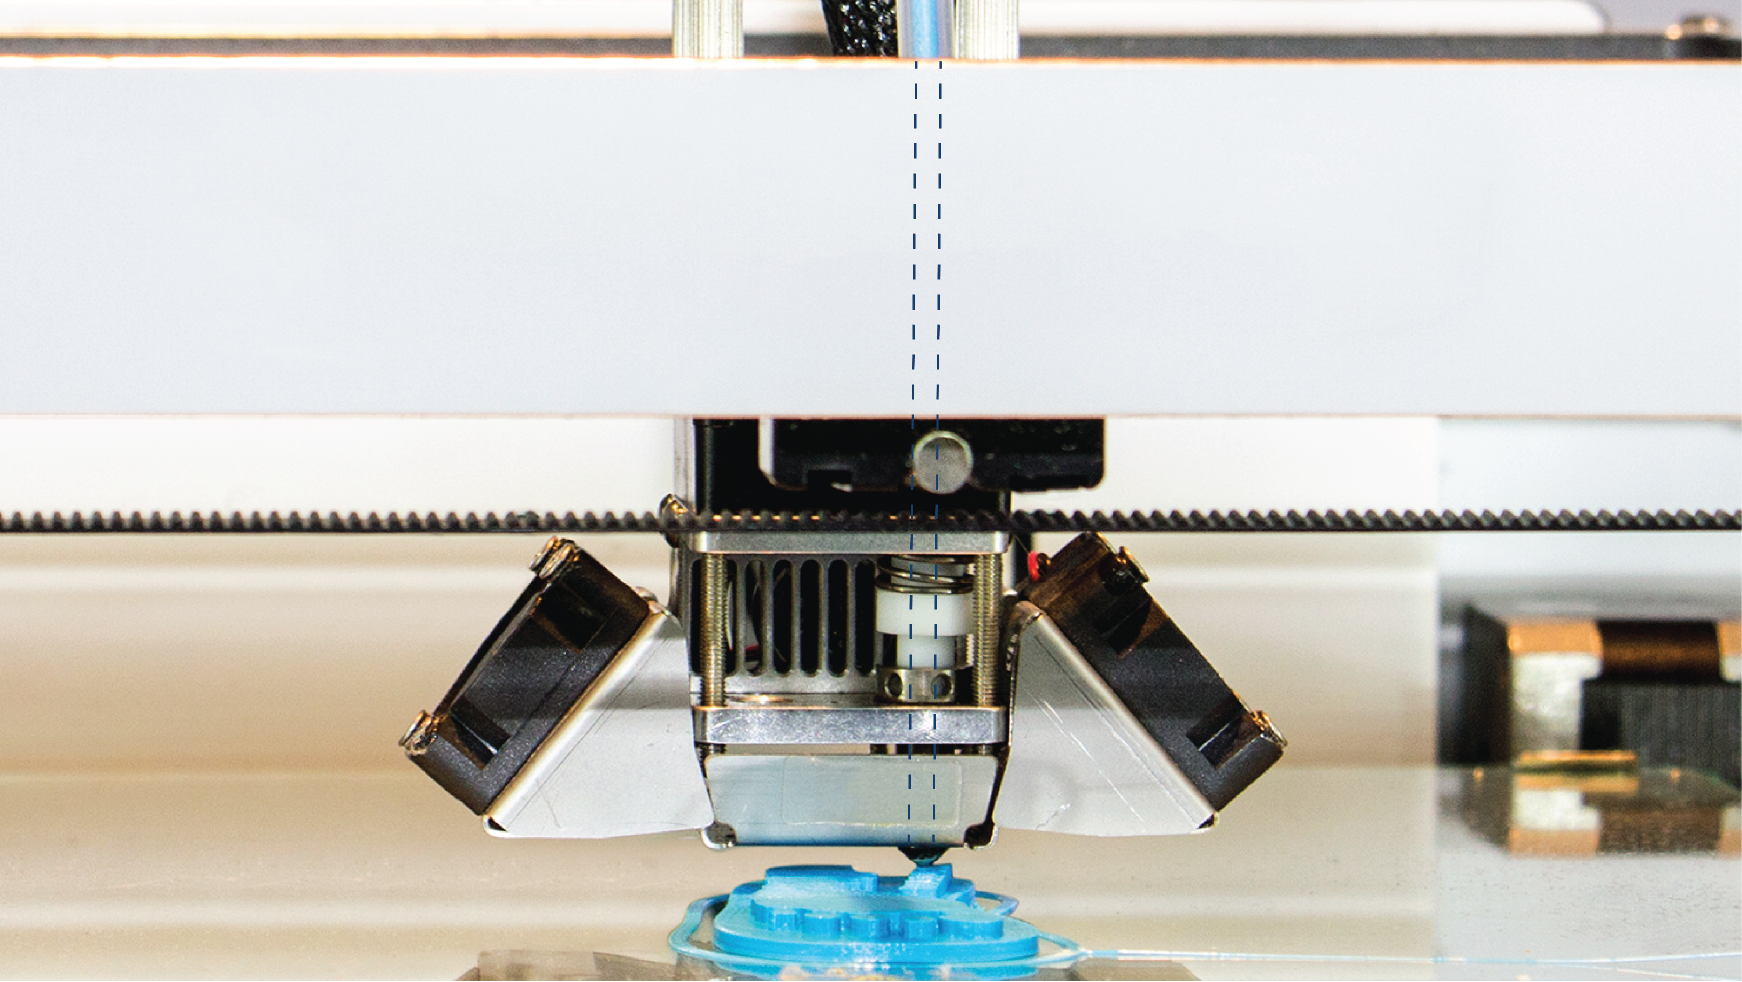 3D printer creating an object